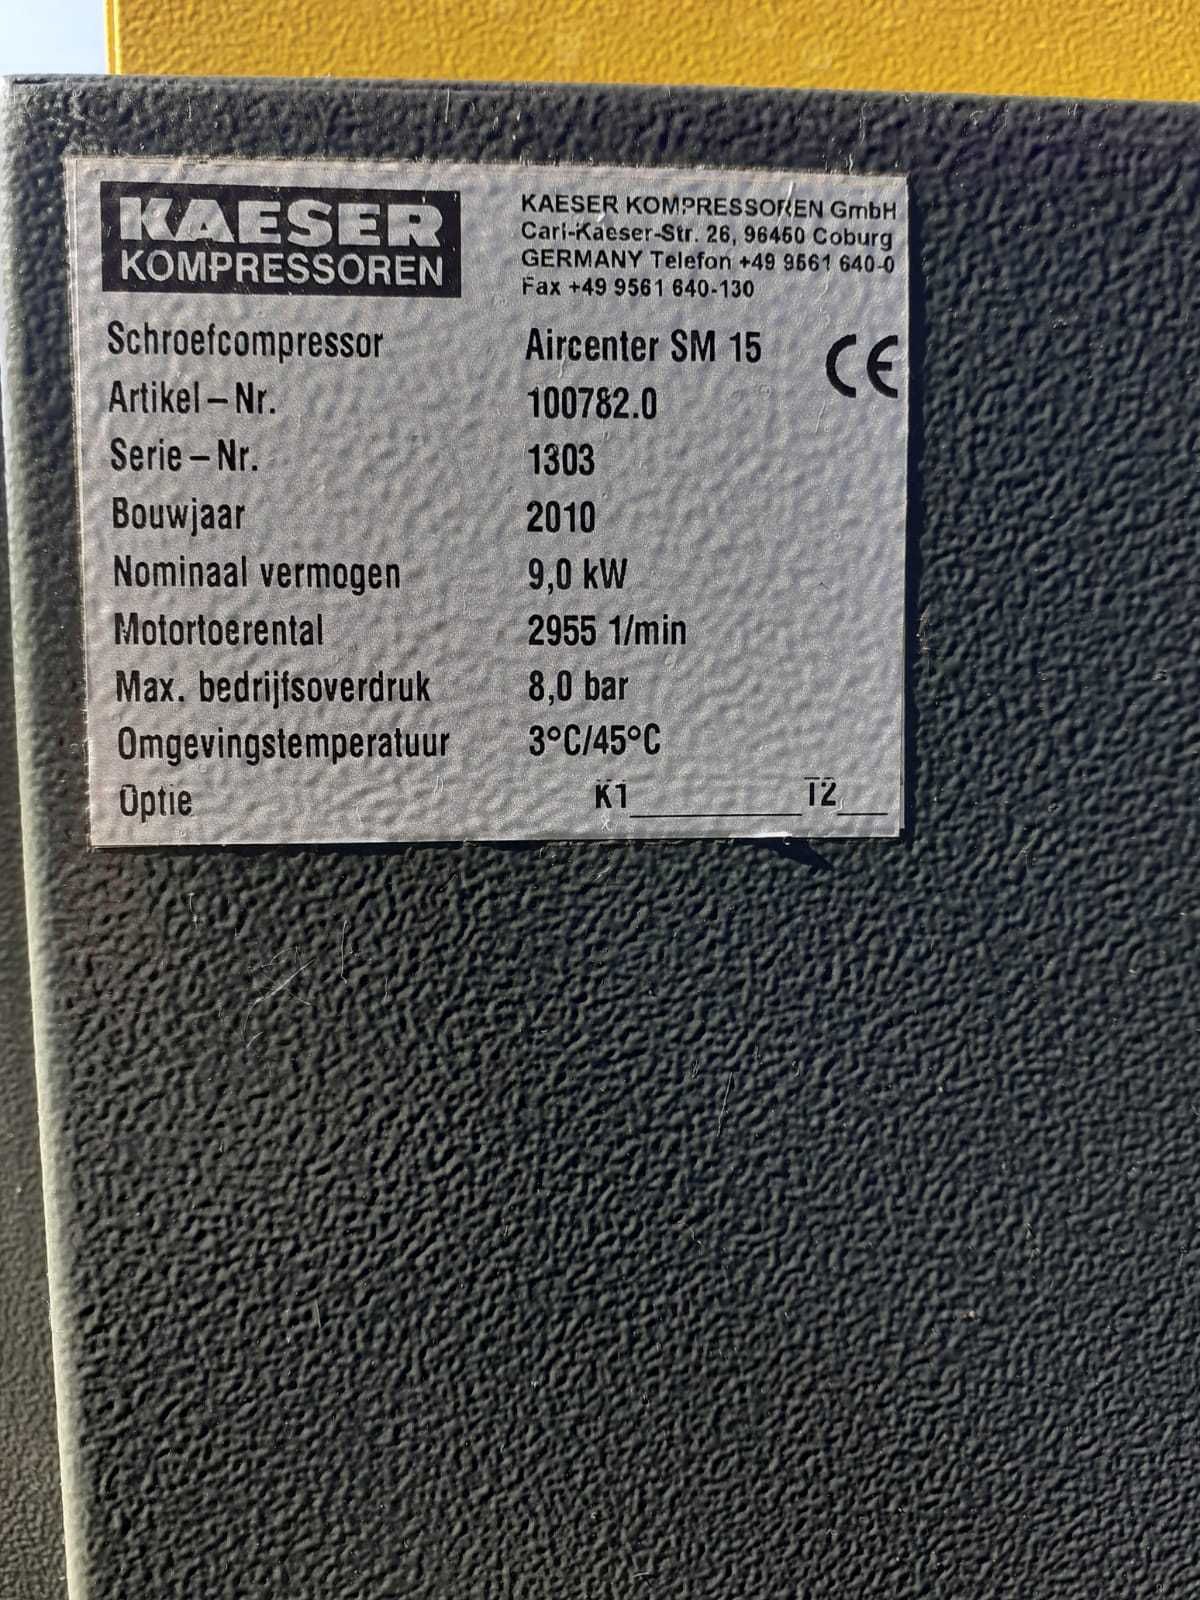 Spężarka śrubowa,kompresor Kaeser AIRCENTER SM15,9 KW,S013591